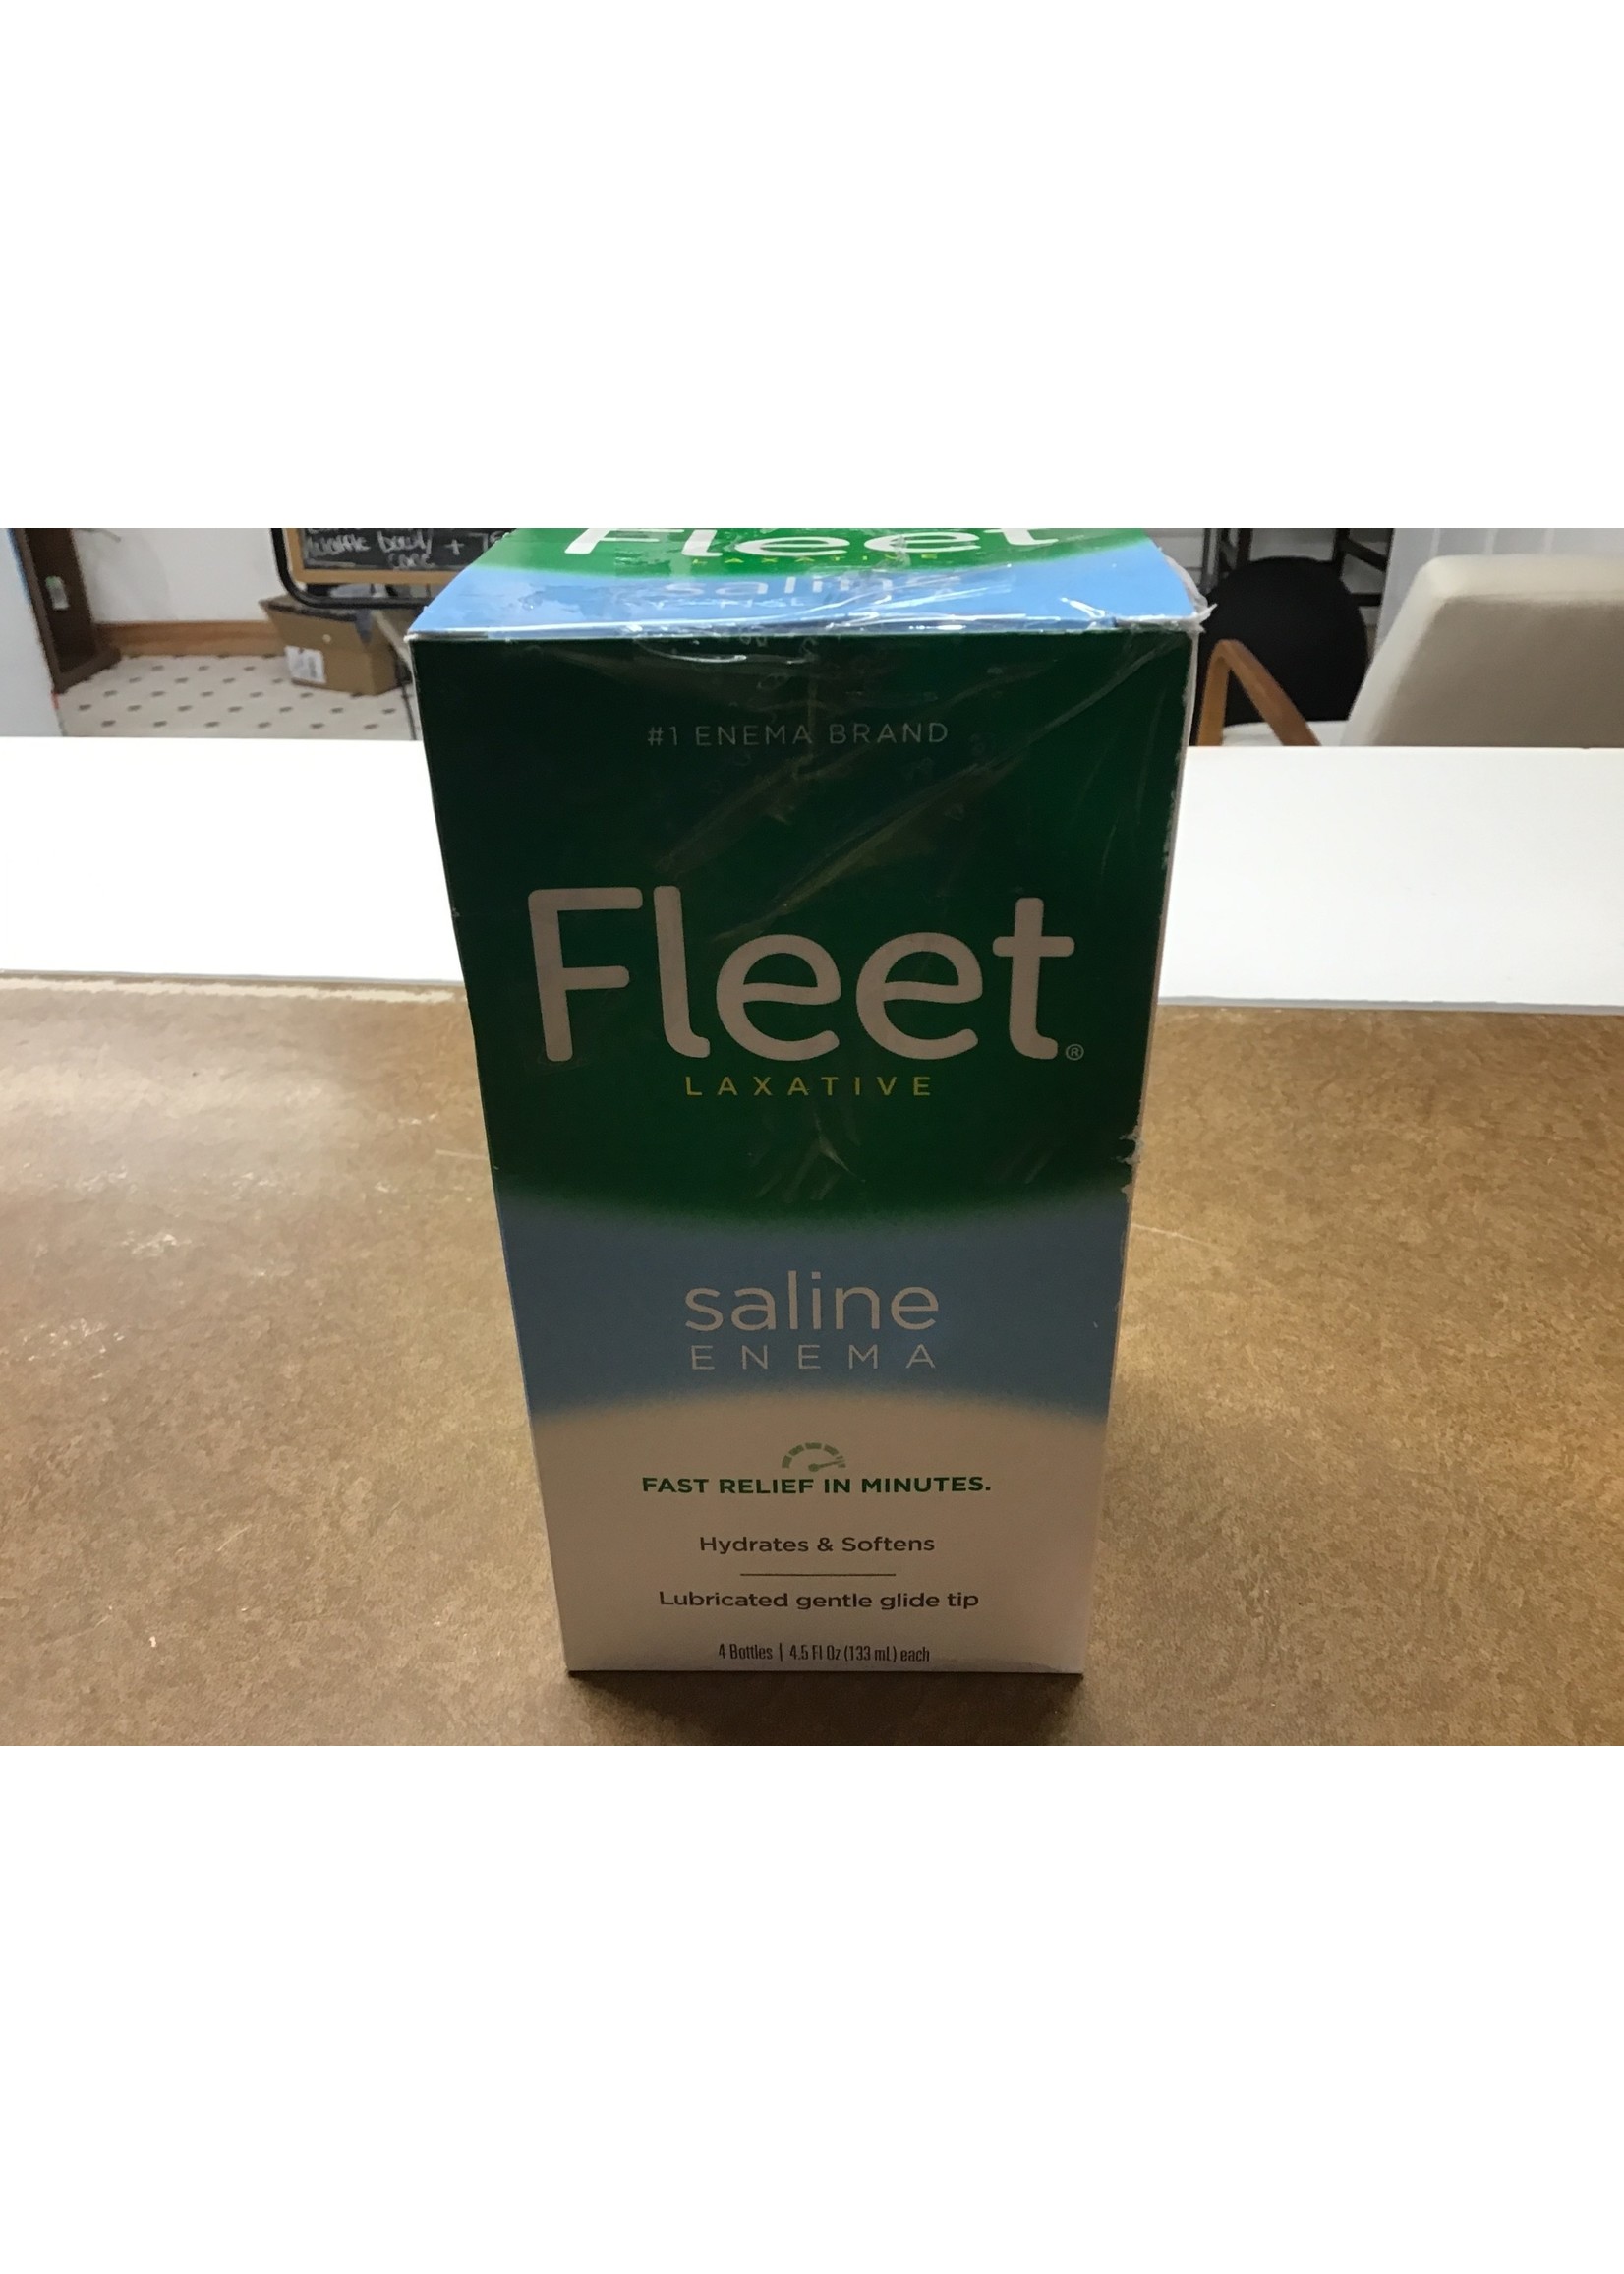 Fleet Saline Enema Laxative- 4 pack